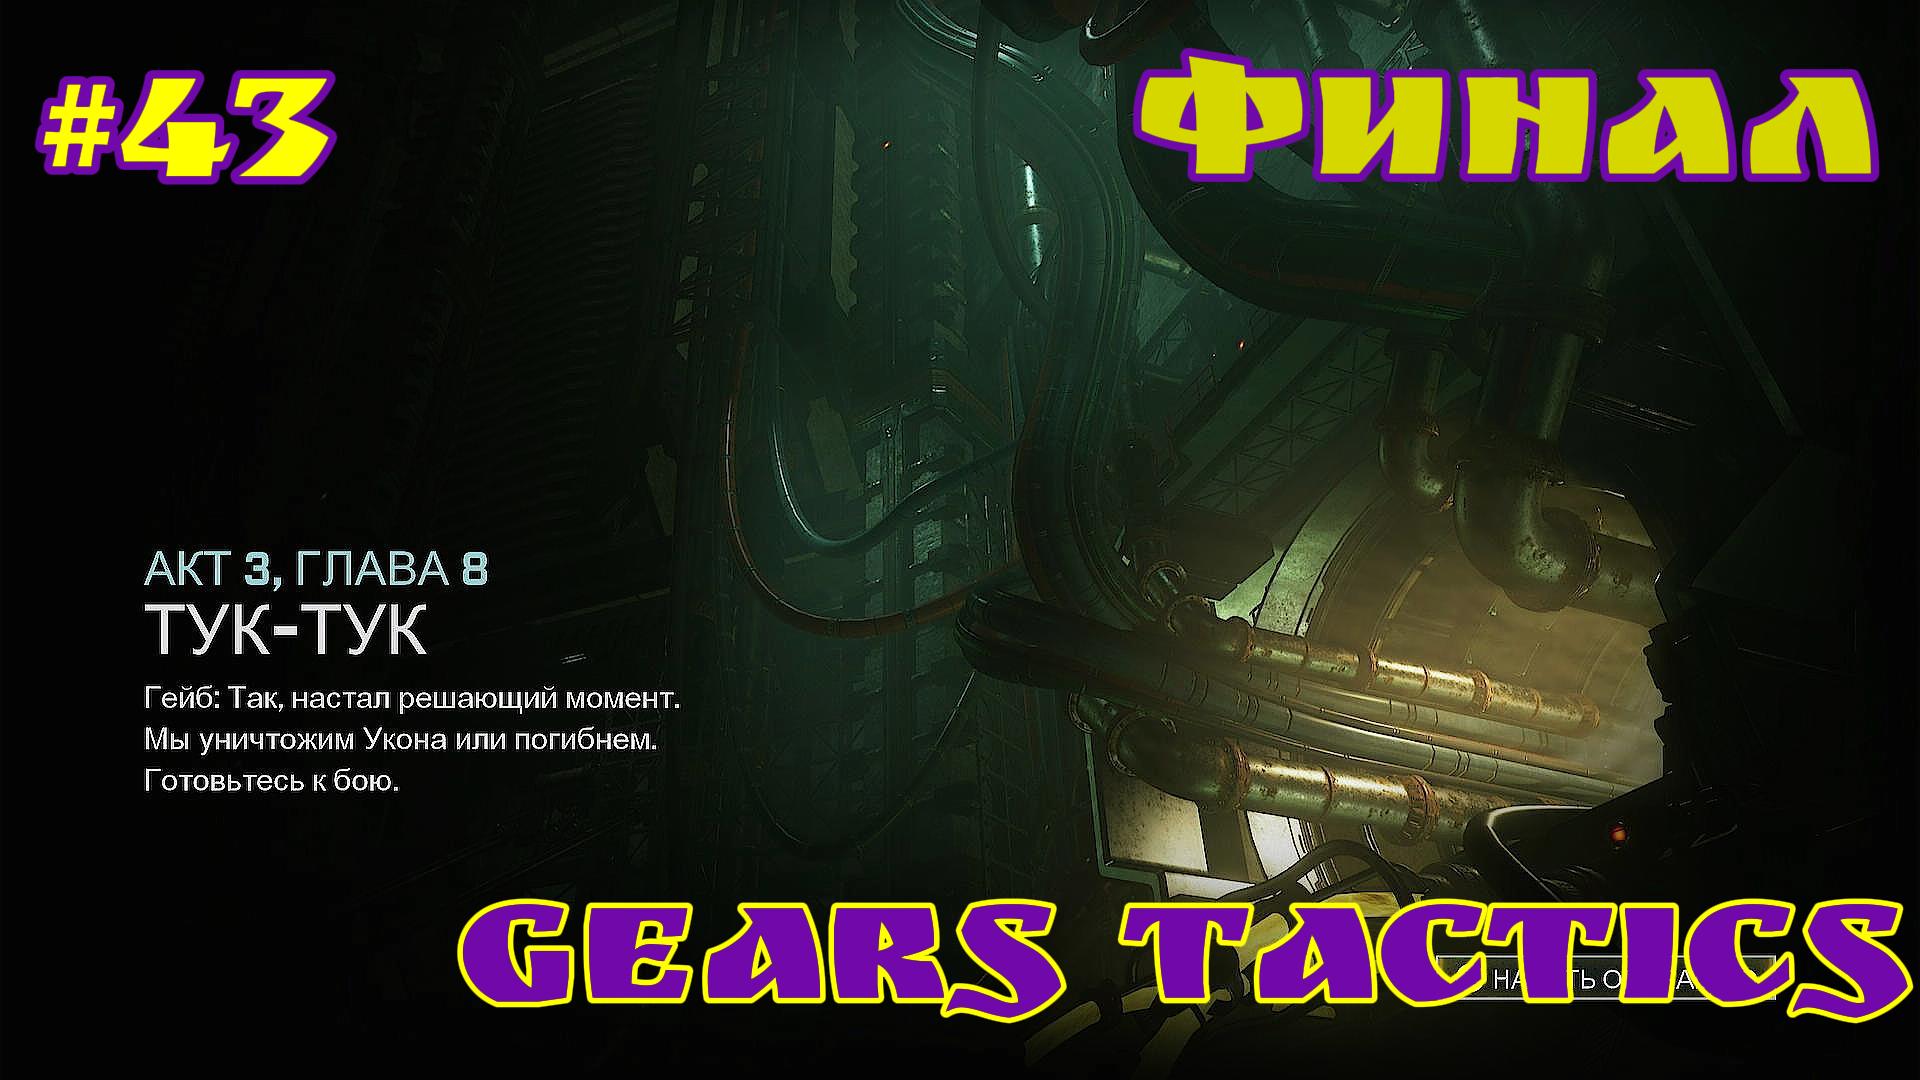 Gears Tactics / #43 / XBOX SERIES S